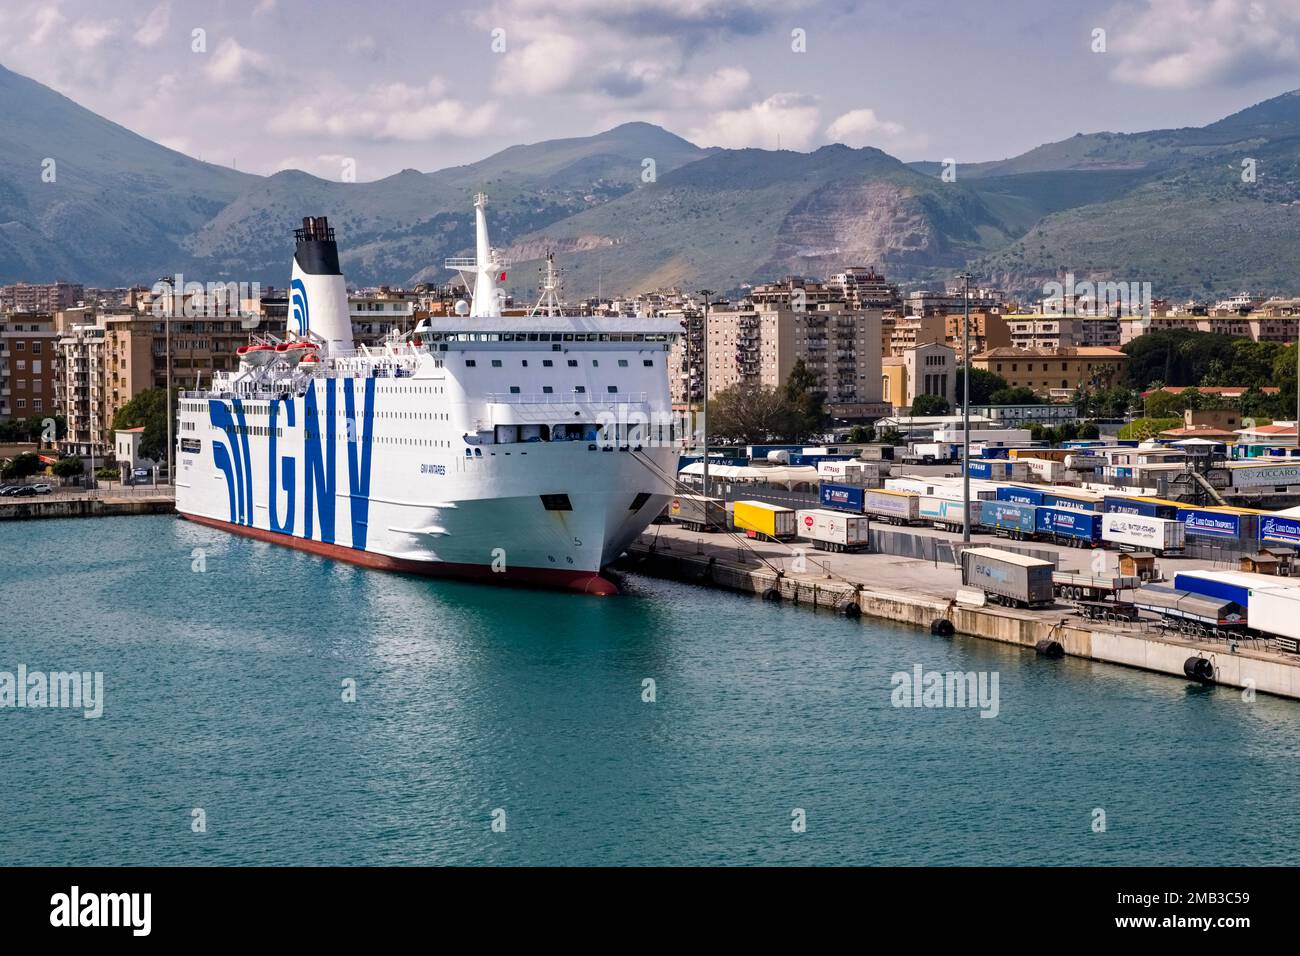 The GNV Antares, a Passenger/Ro-Ro Cargo Ship, is anchored in the Port of Palermo, Porto di Palermo. Stock Photo